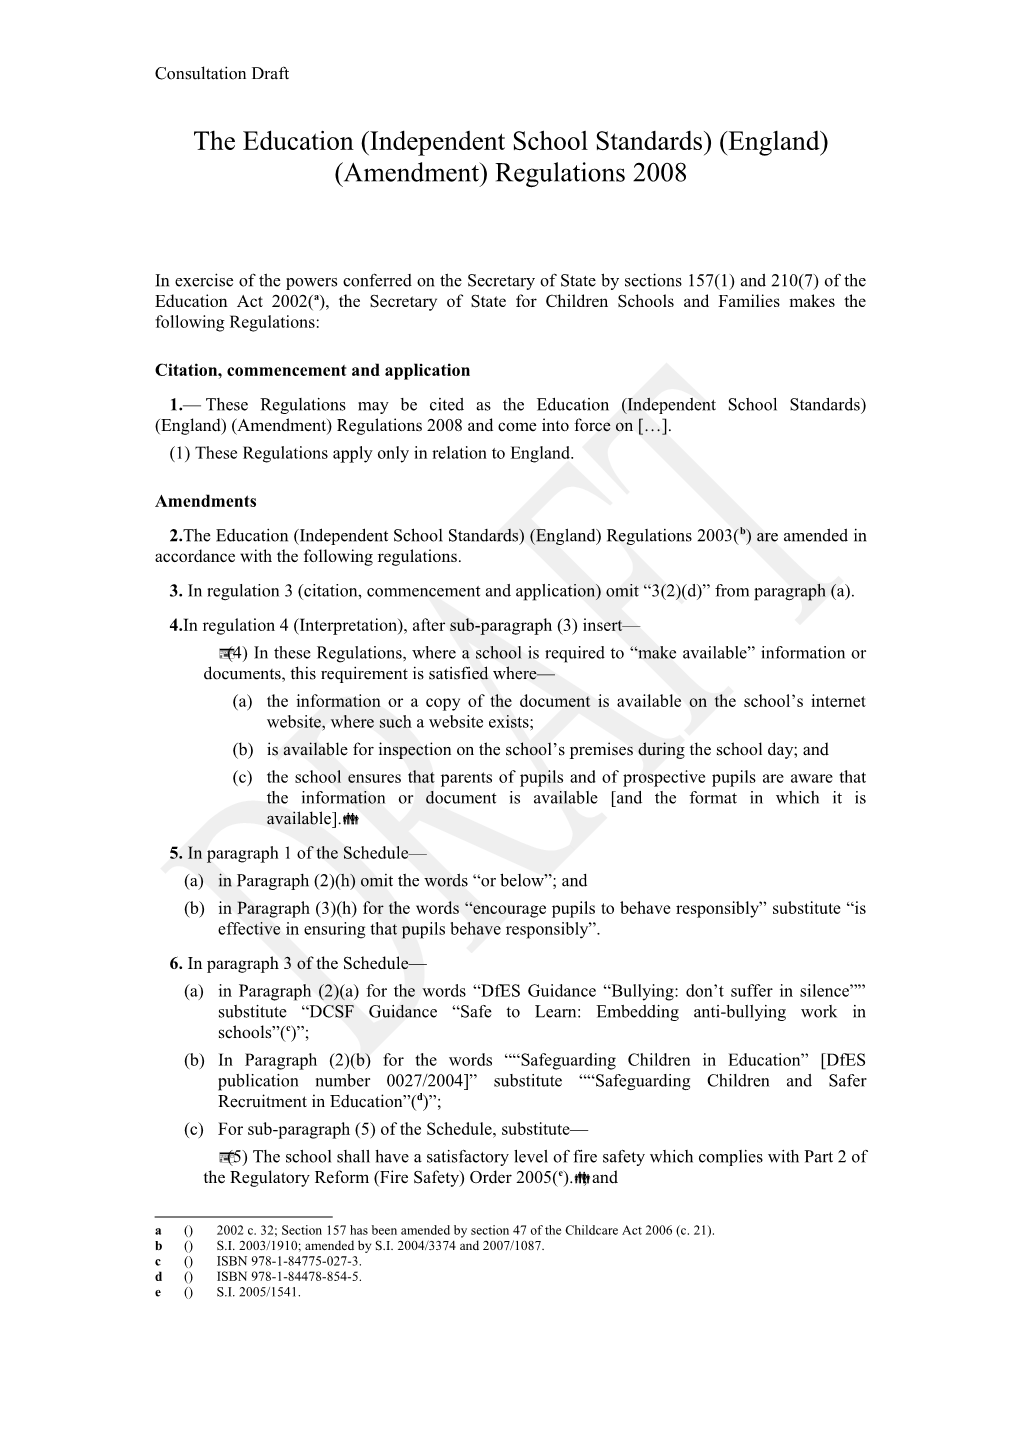 The Education (Independentschool Standards) (England) (Amendment) Regulations 2008